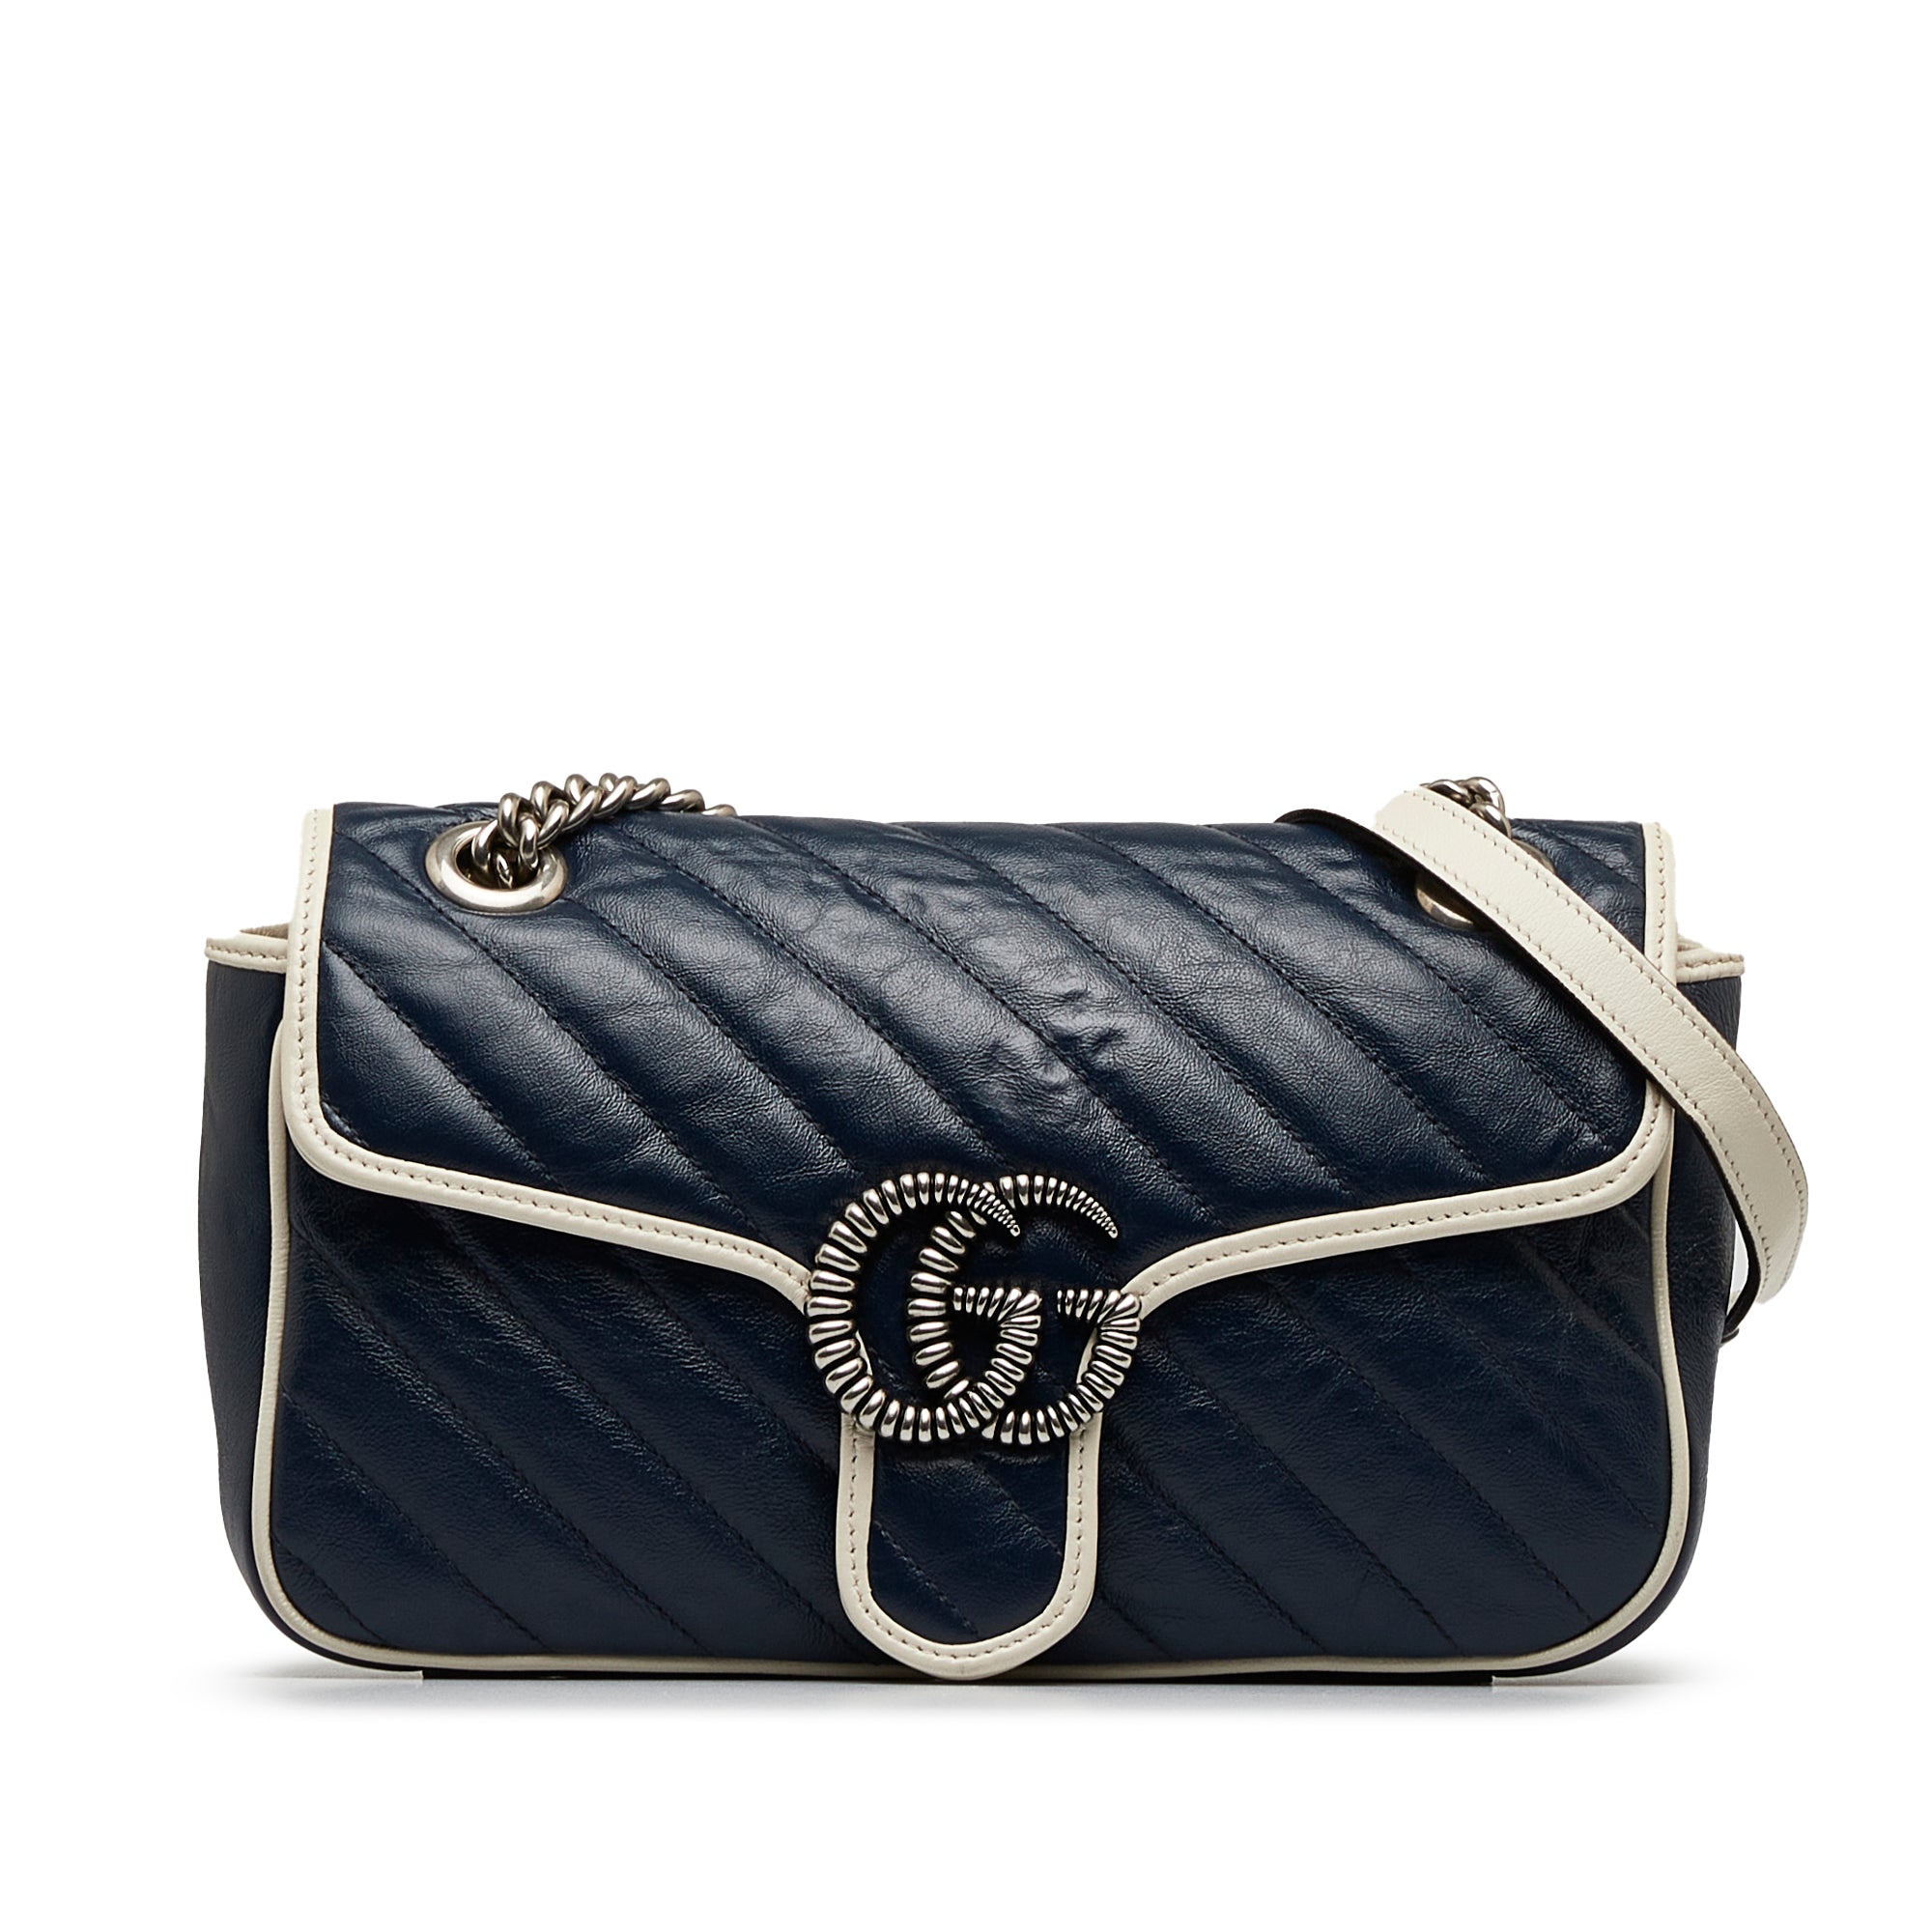 Gucci pre-owned blue GG Supreme padlock cross-body bag